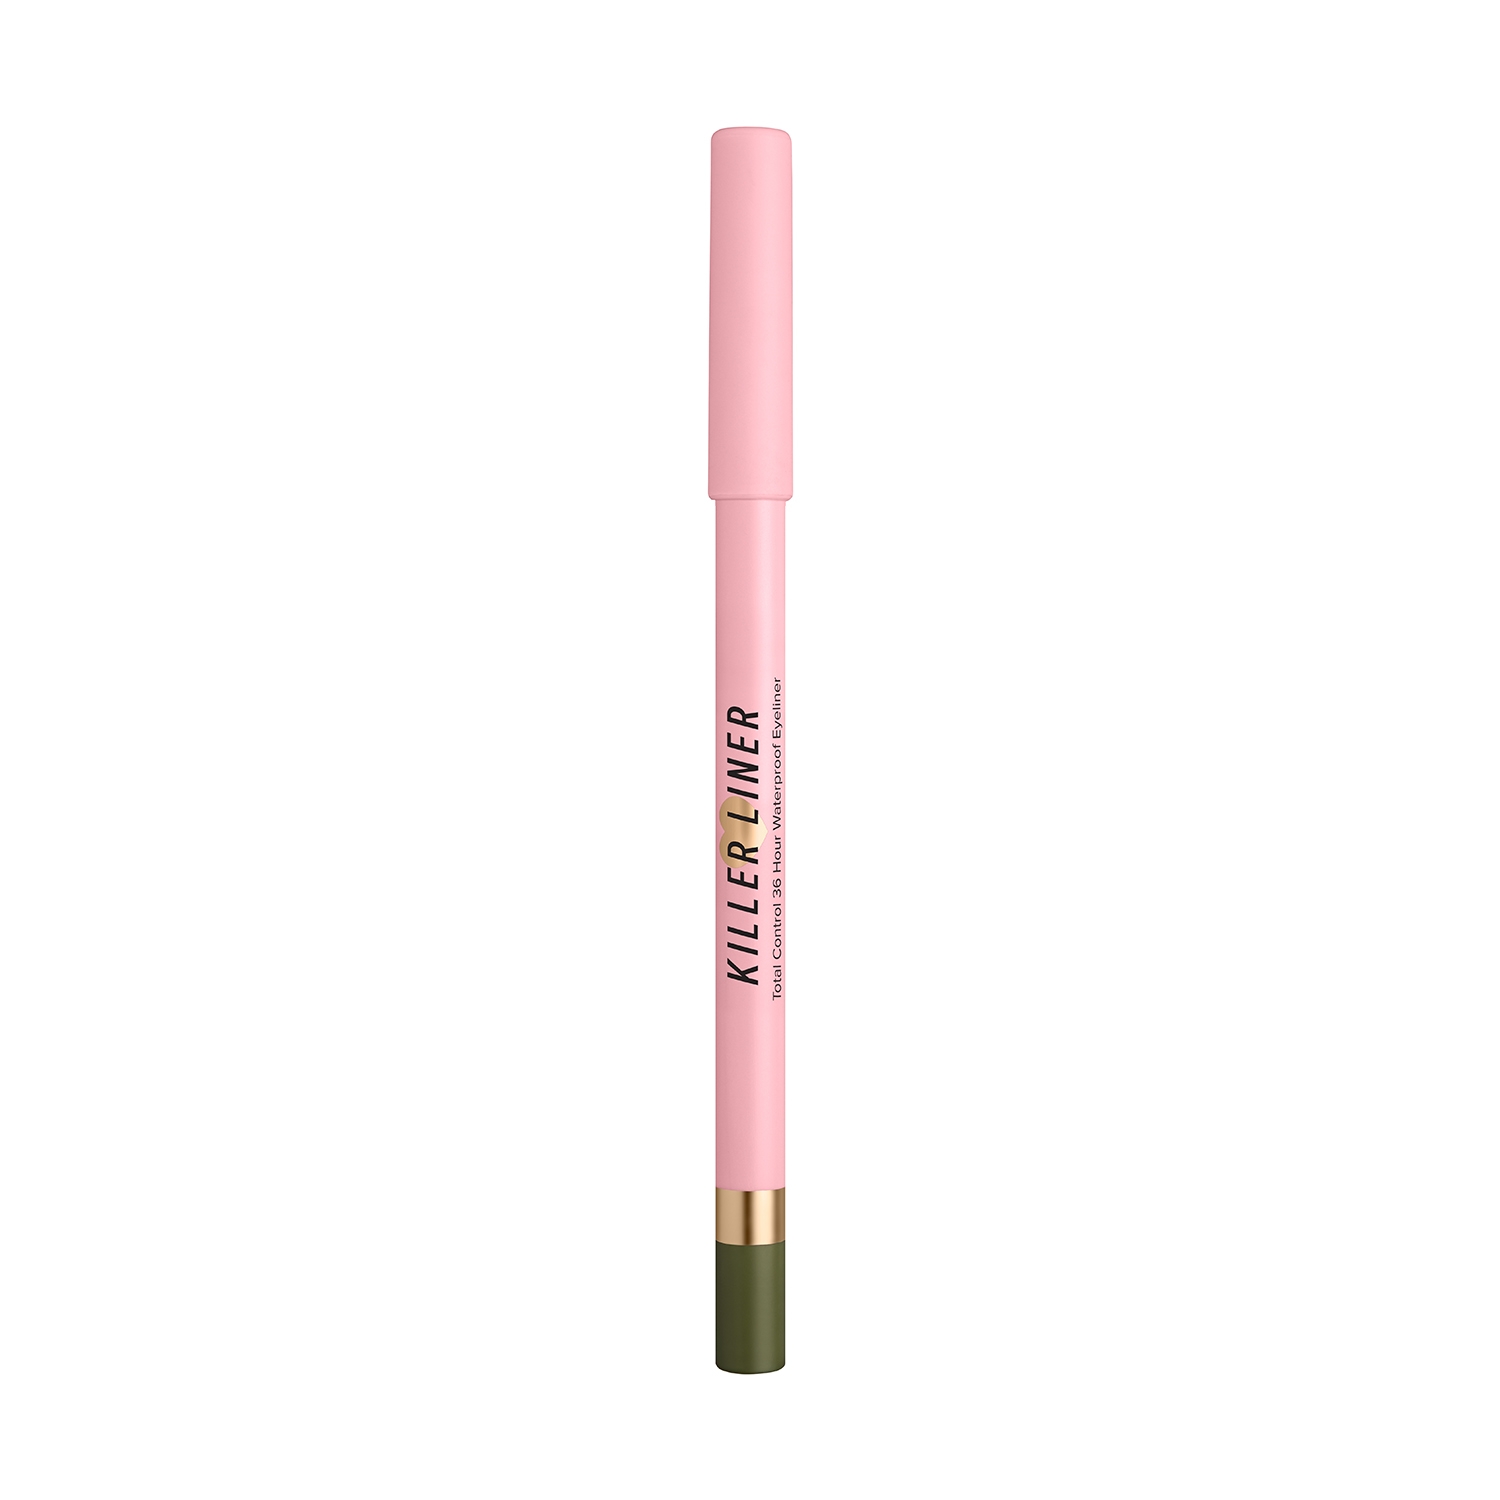 Too Faced | Too Faced Killer Liner 36 Hour Waterproof Gel Eyeliner Pencil - Camo (1.2g)